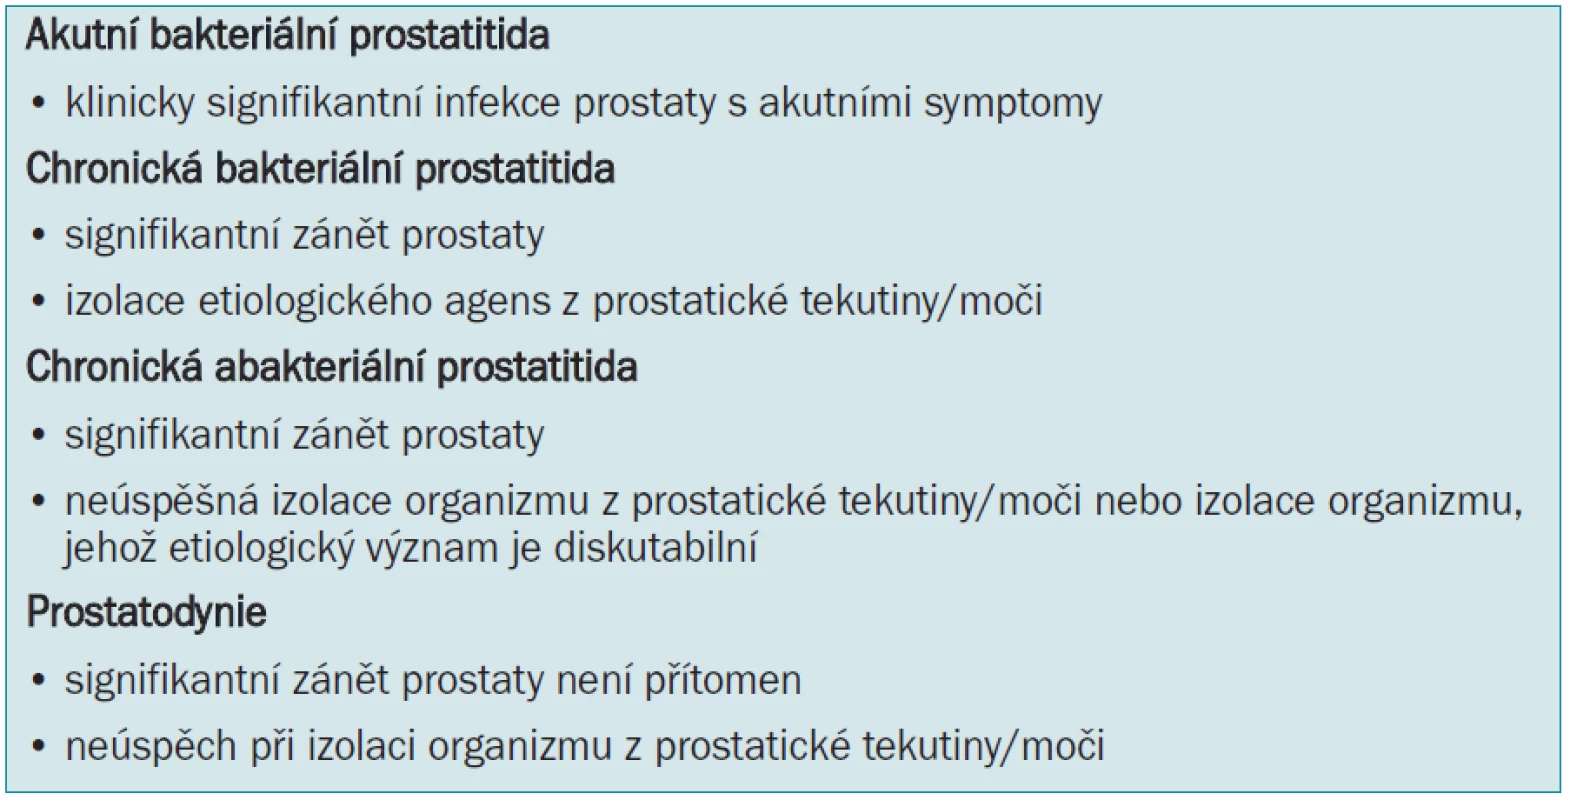 Klasifikace prostatitidy dle Dracha et al [5].